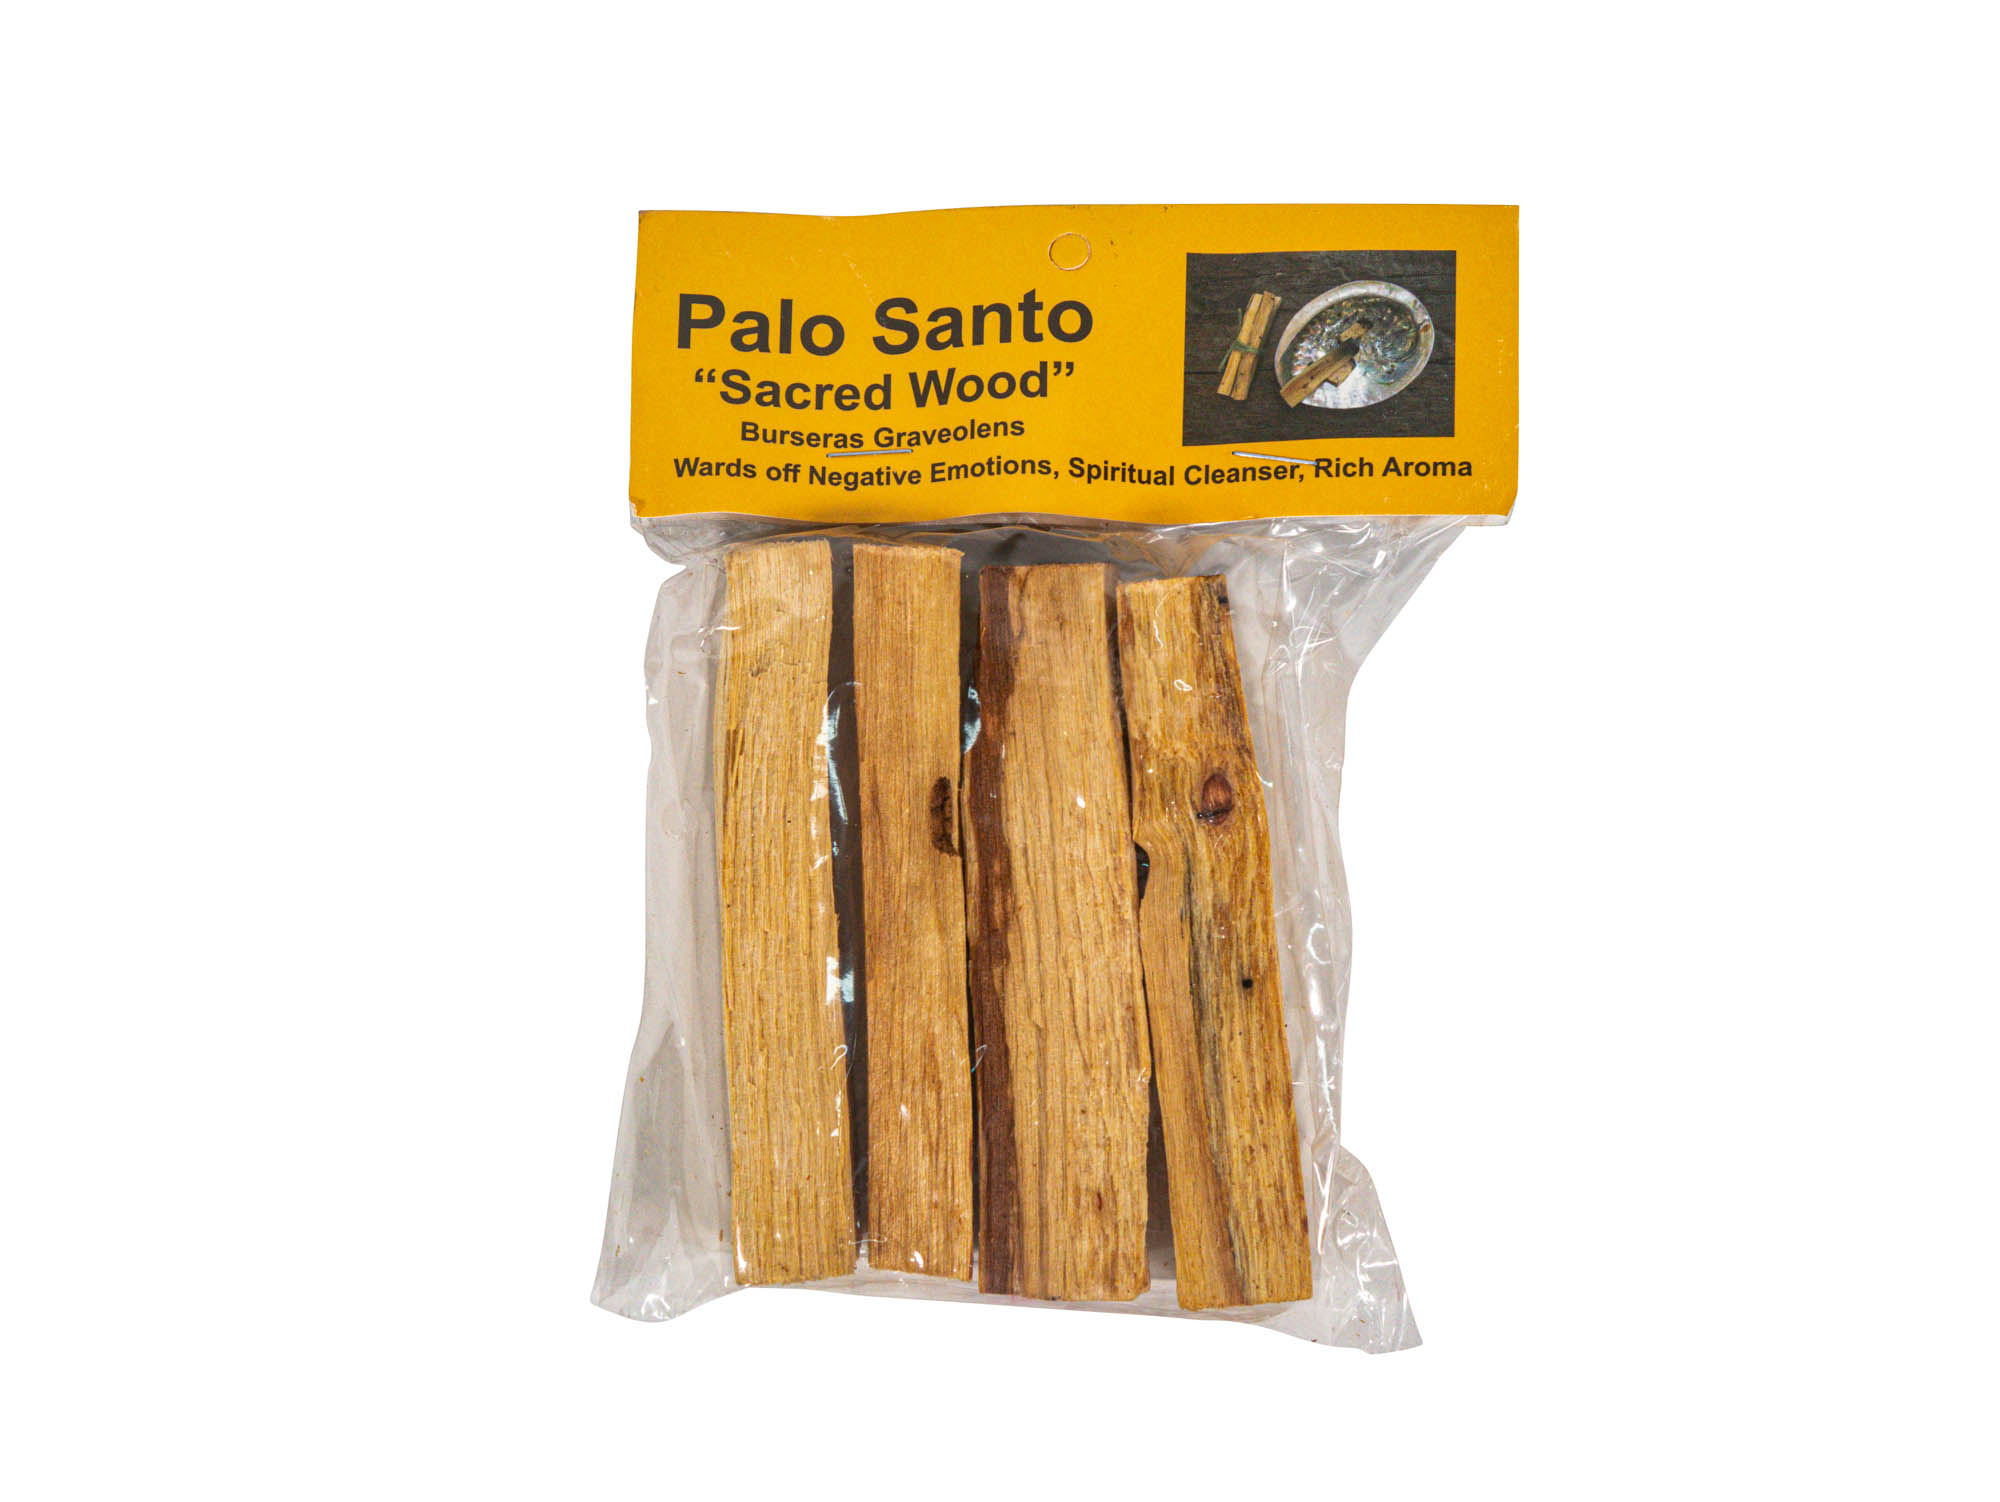 Palo Santo: Pack of 4 Sticks - 1380-24-AS (9UL19)